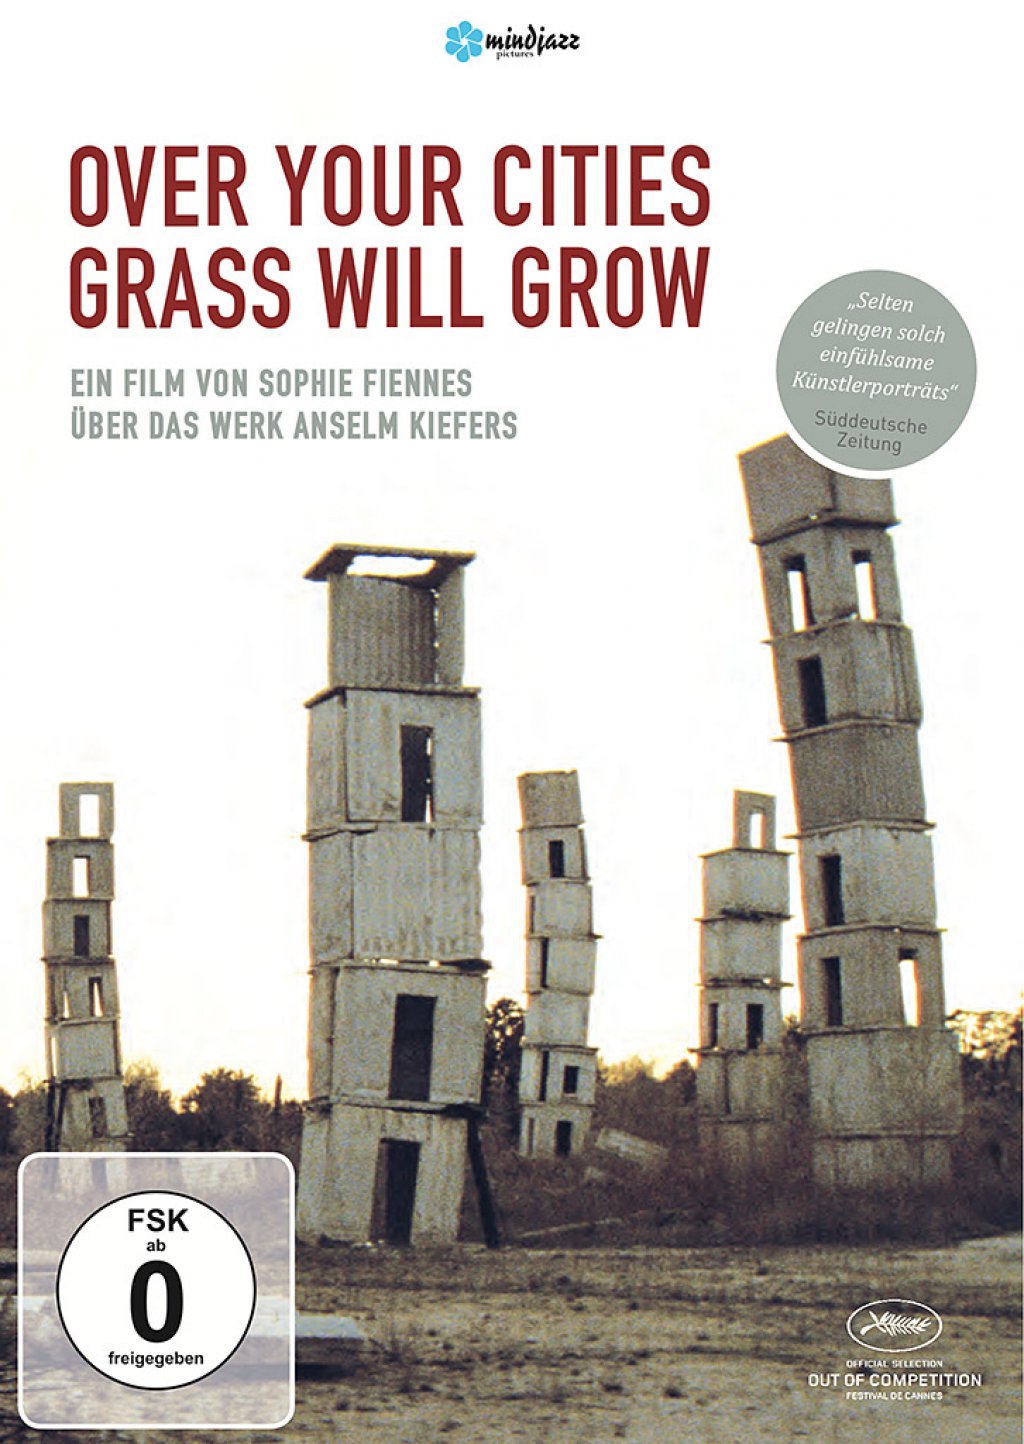 Over your cities grass will grow (DVD) - Anselm Kiefer Over Your Cities Grass Will Grow